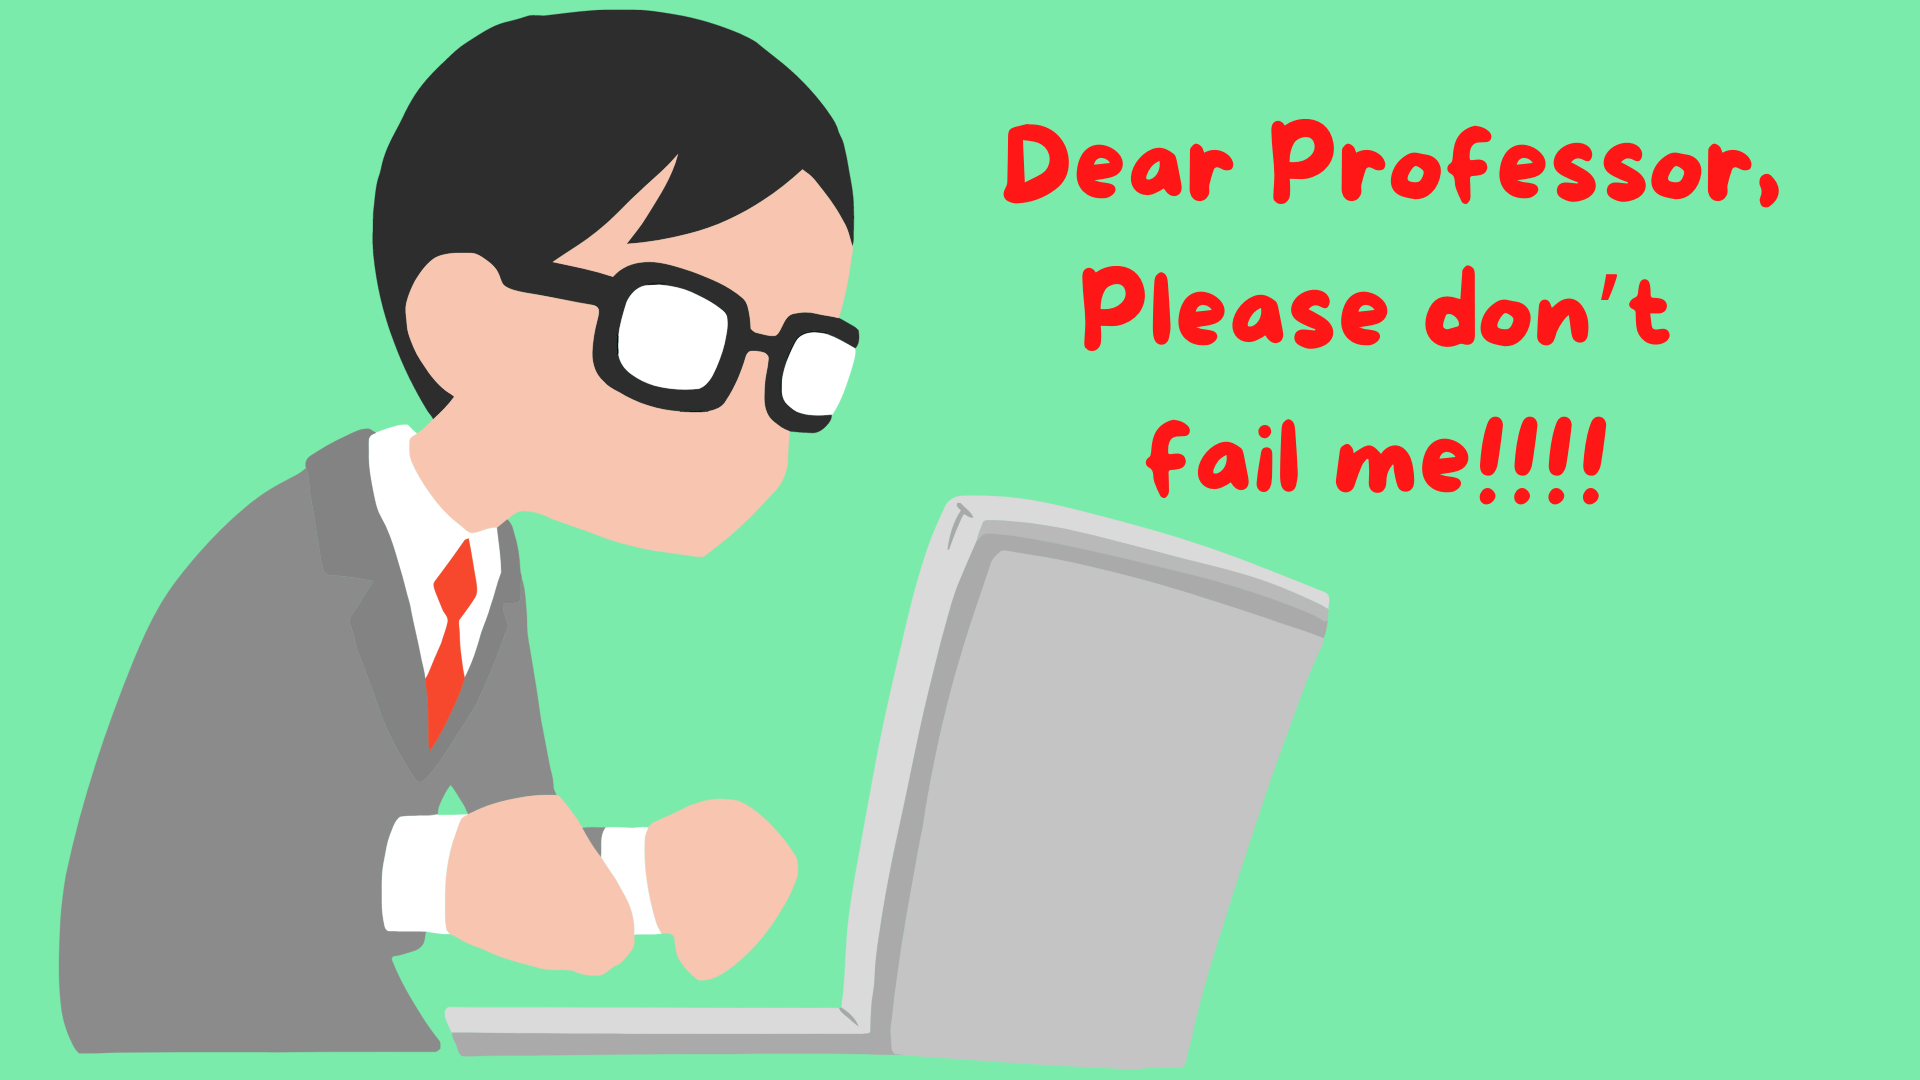 Student emailing dear professor, please don't fail me